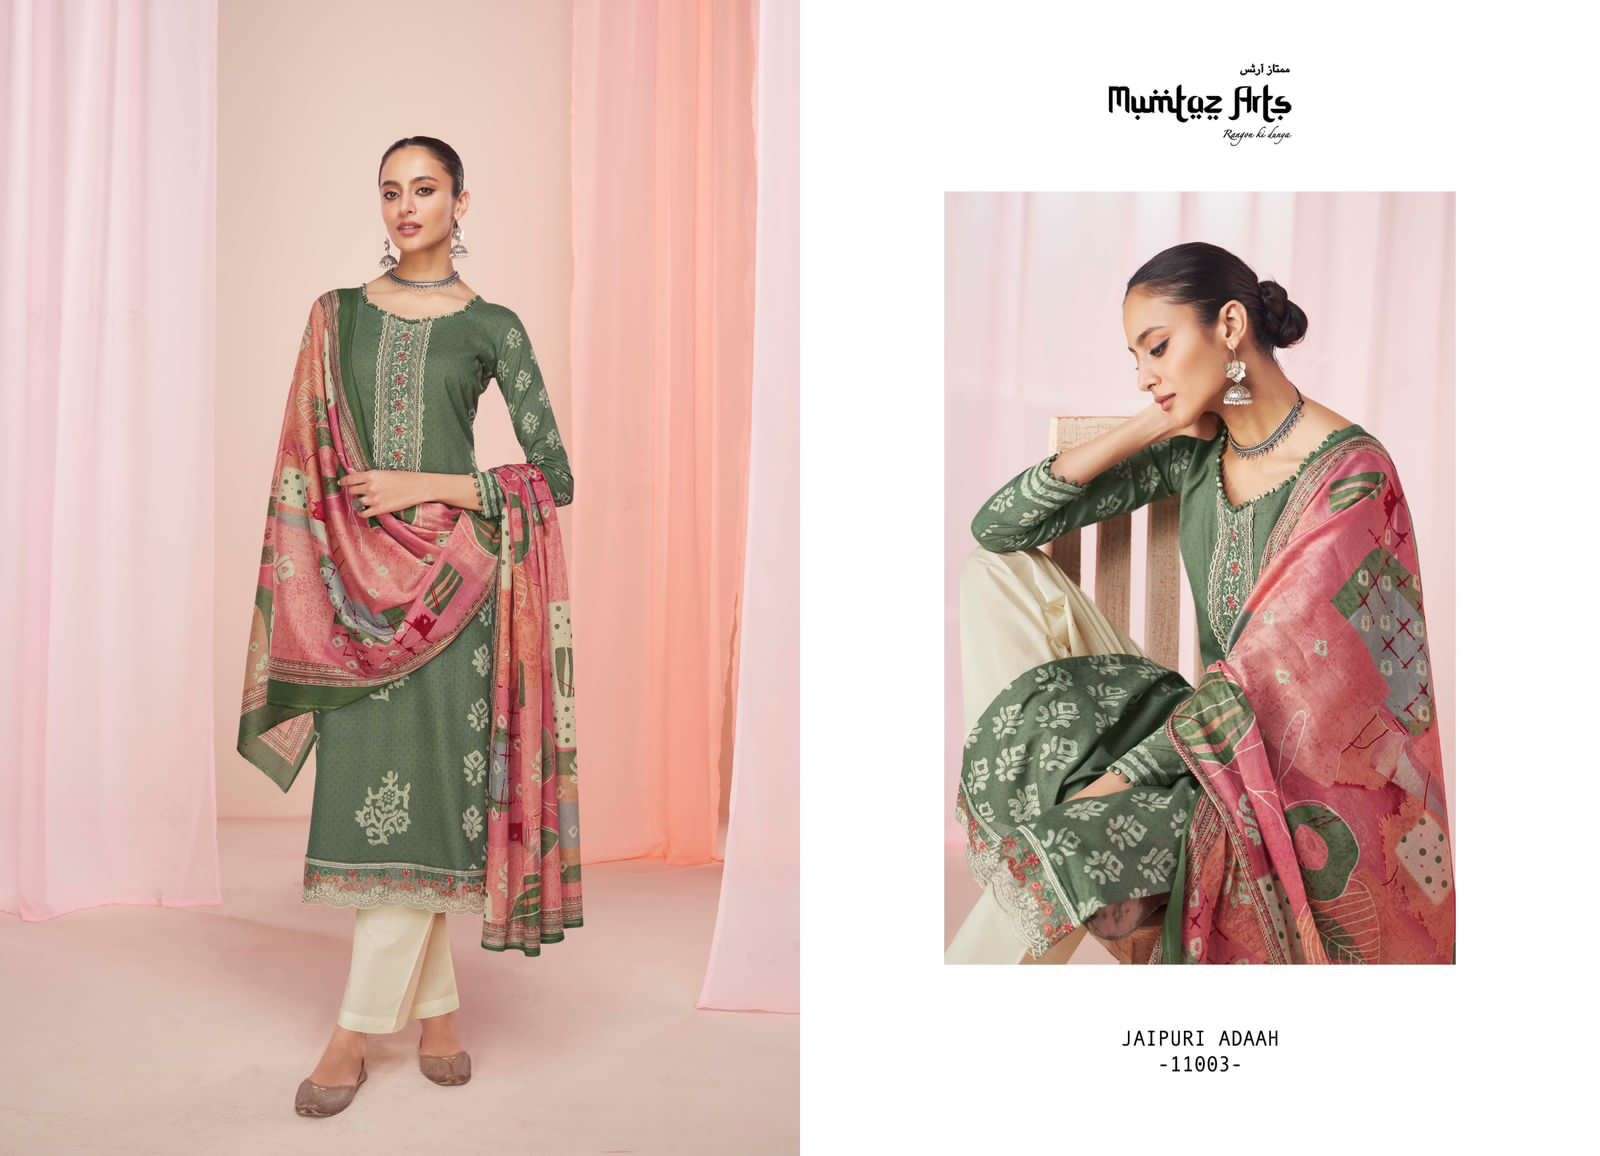 mumtaz arts jaipuri adaah 11001-11008 series stylish designer salwar kameez catalogue manufacturer surat 